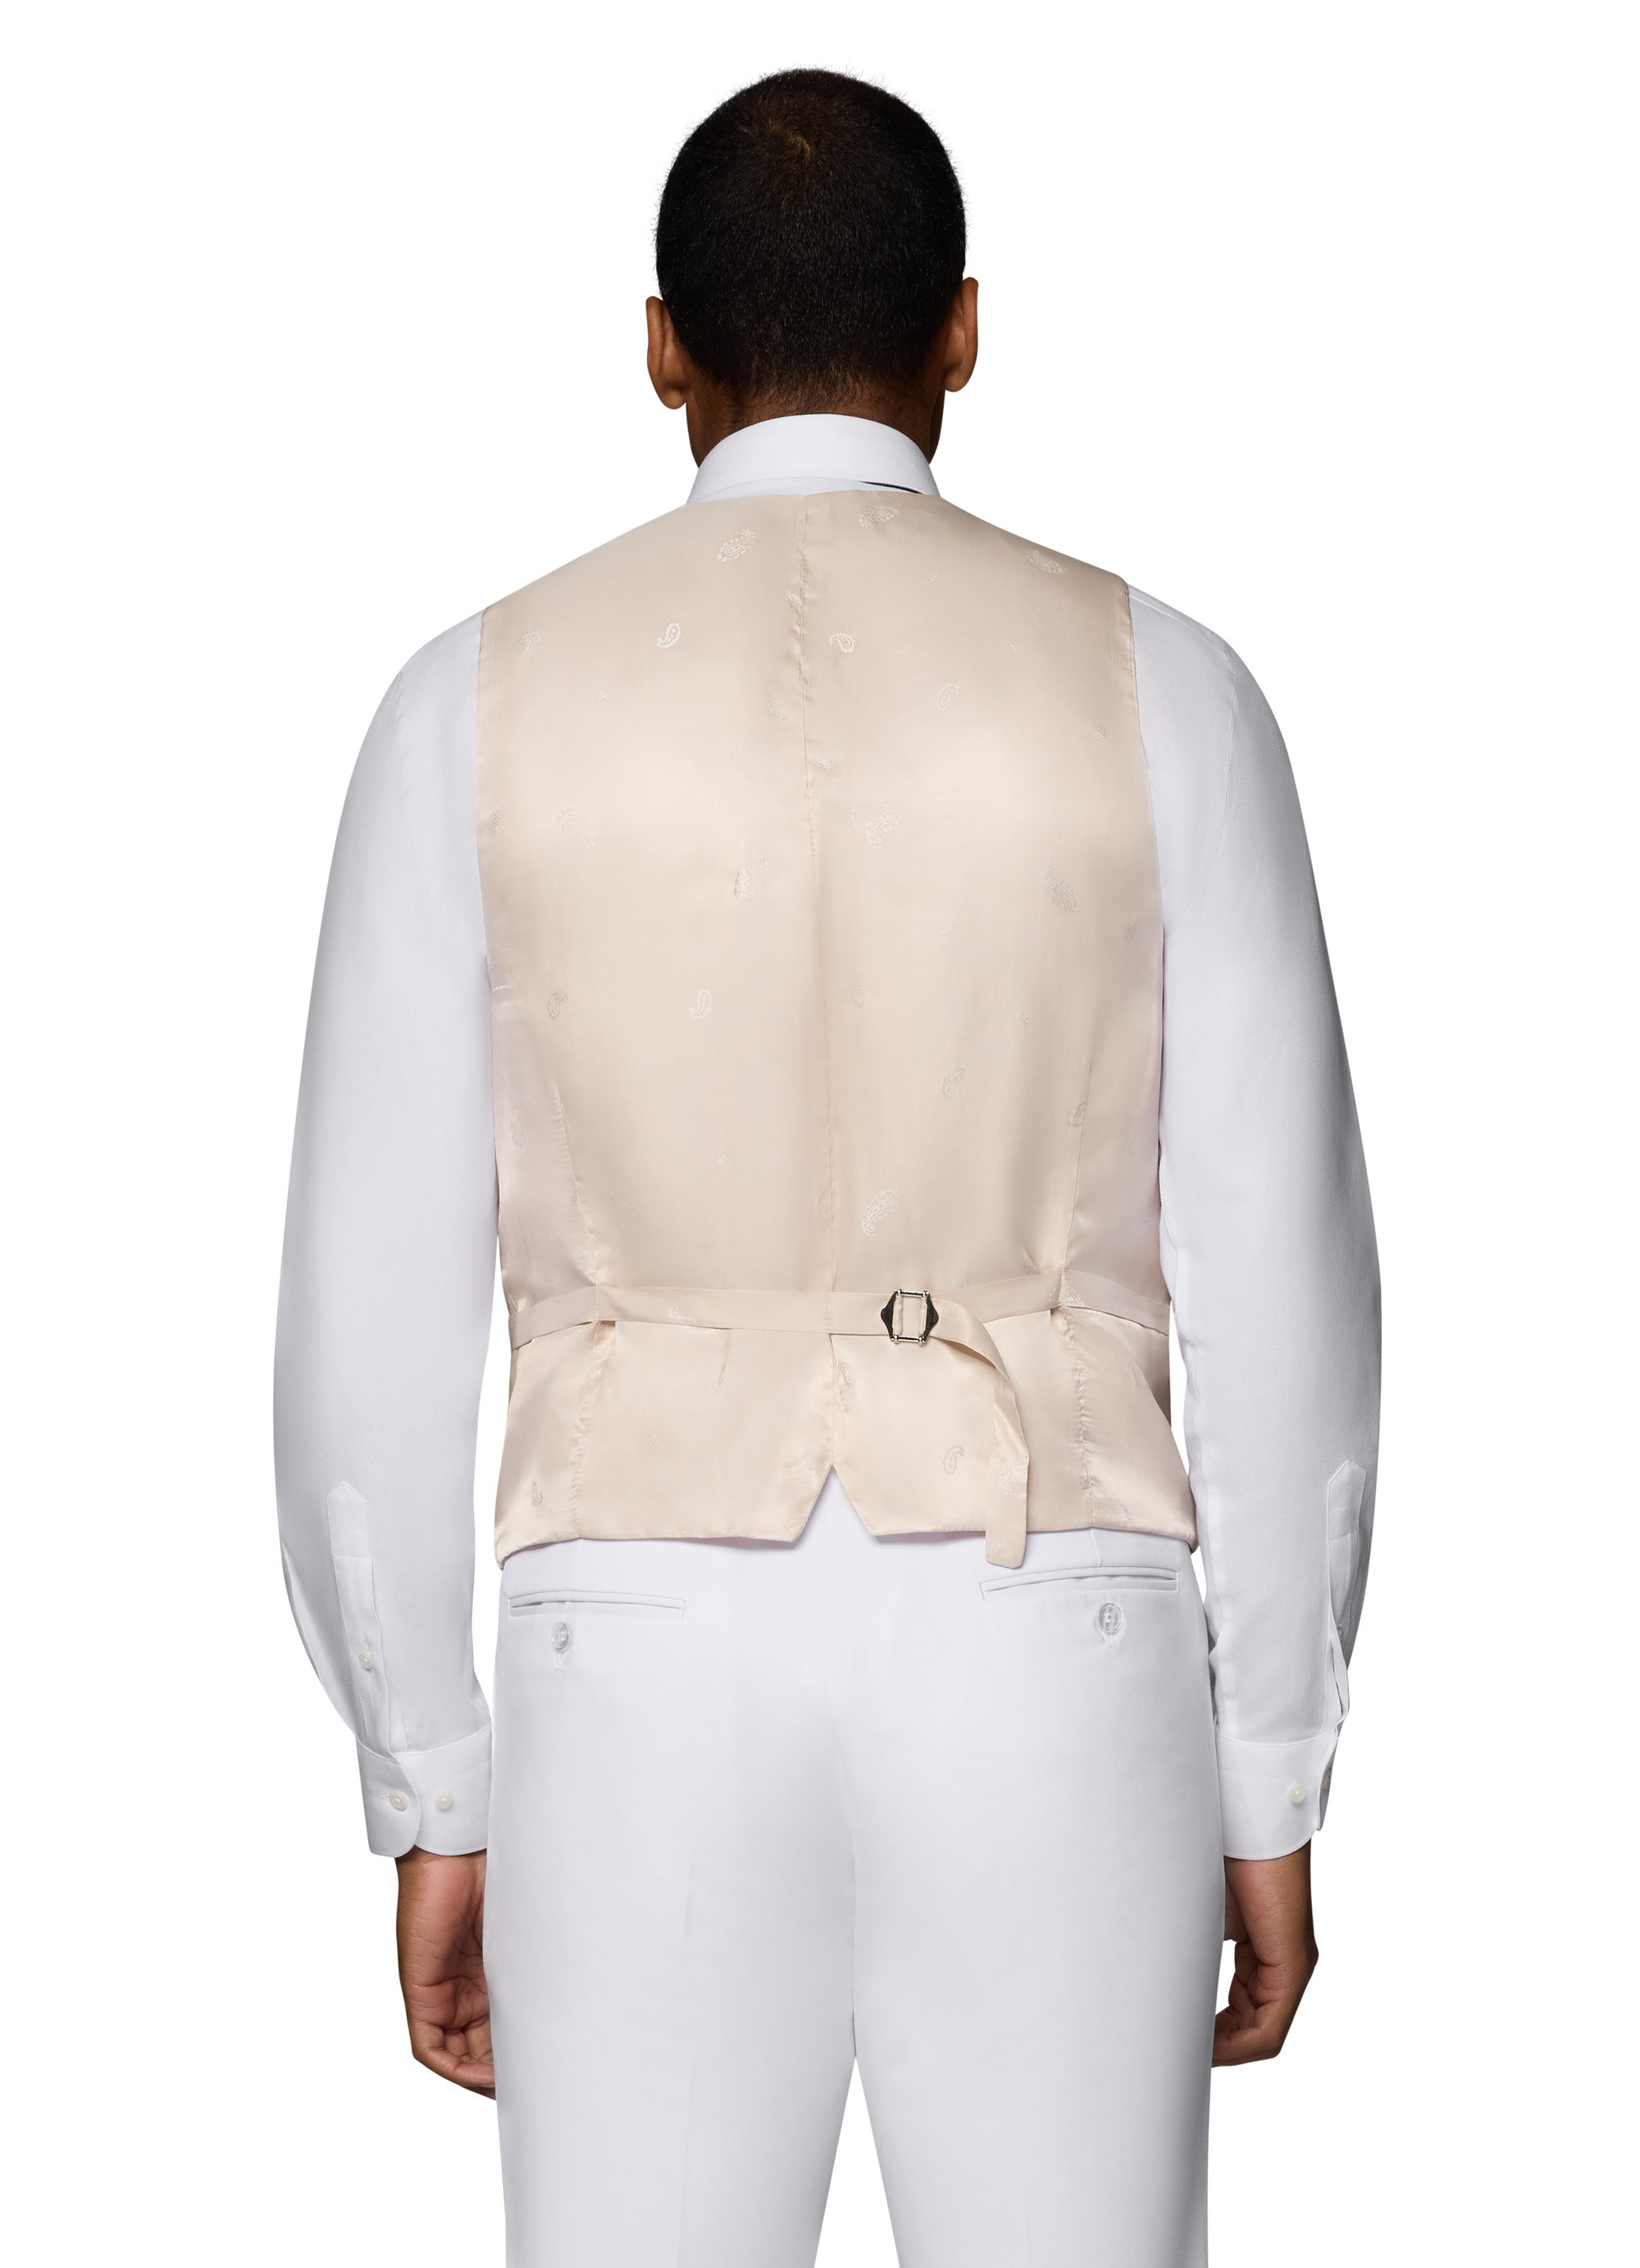 Berragamo Vested Solid White Modern Fit